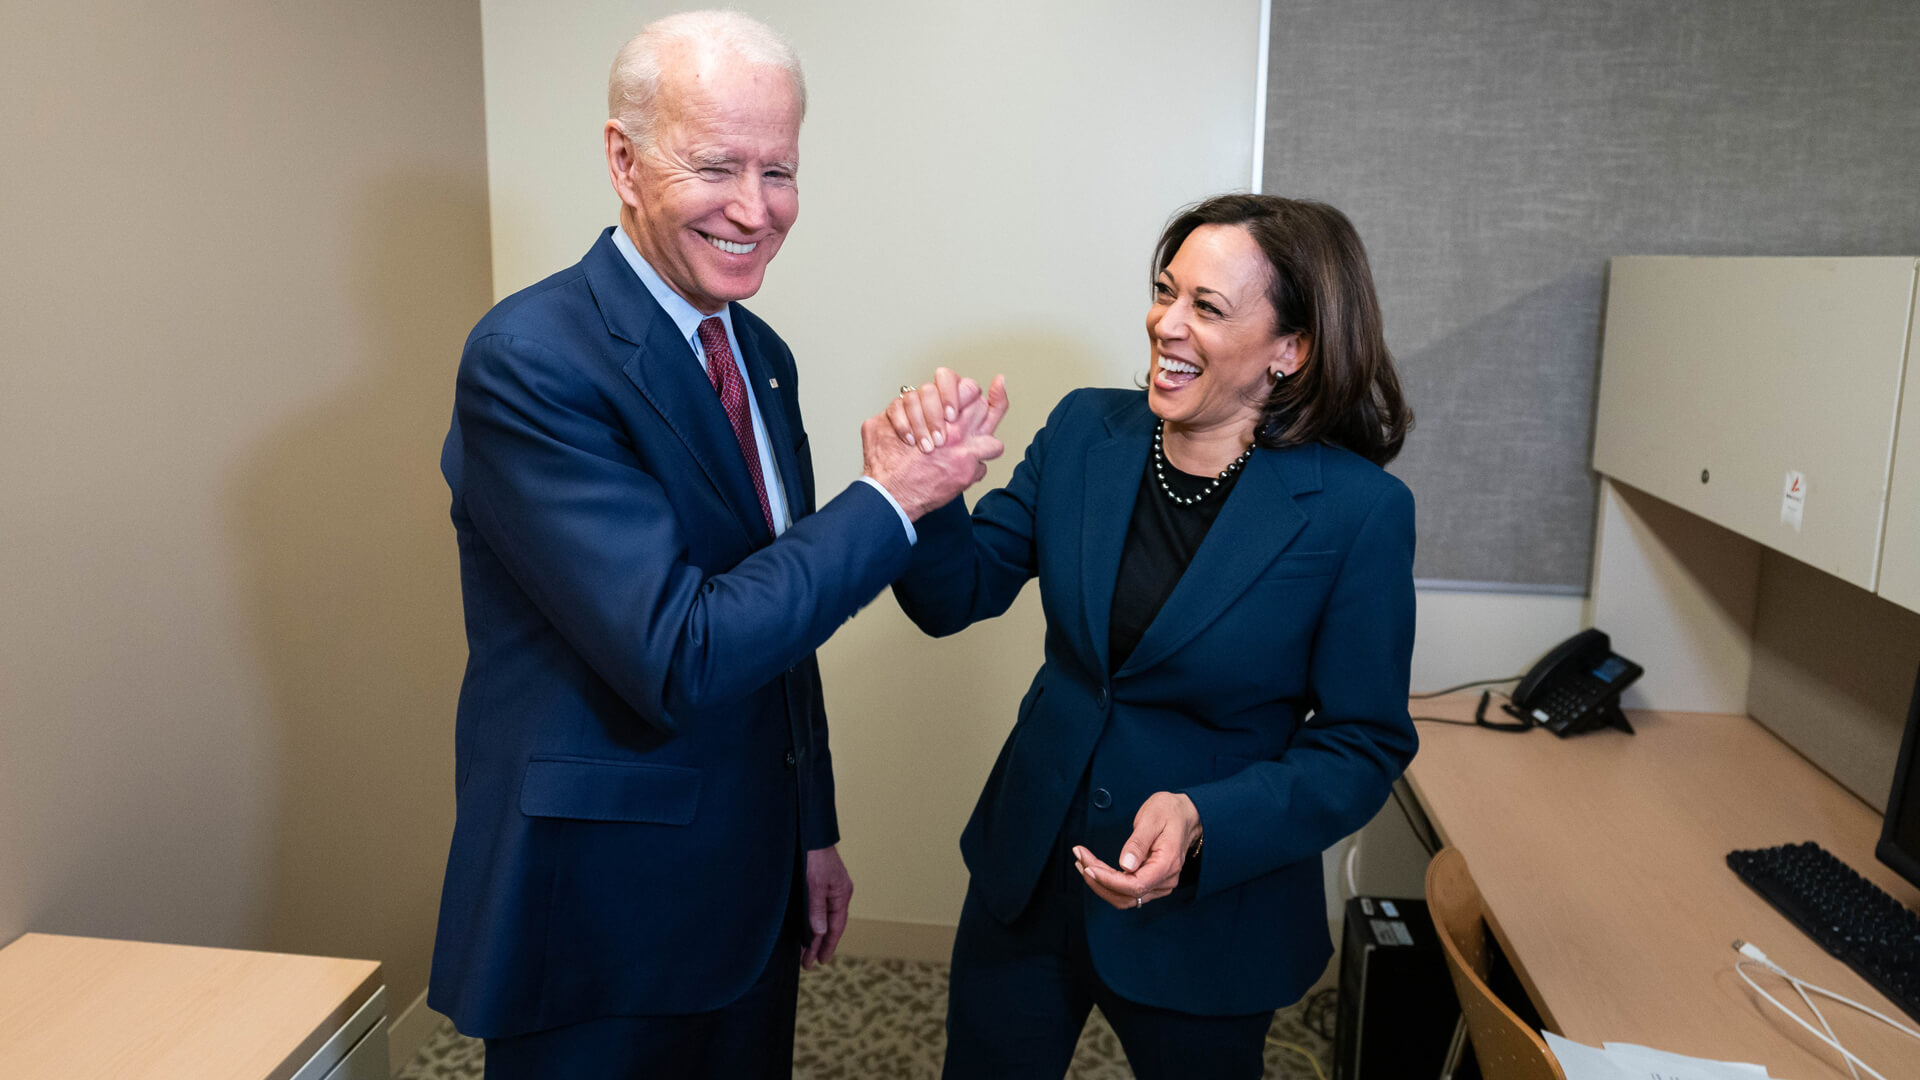 Joe Biden and Kamala Harris holding hands smiling in an office